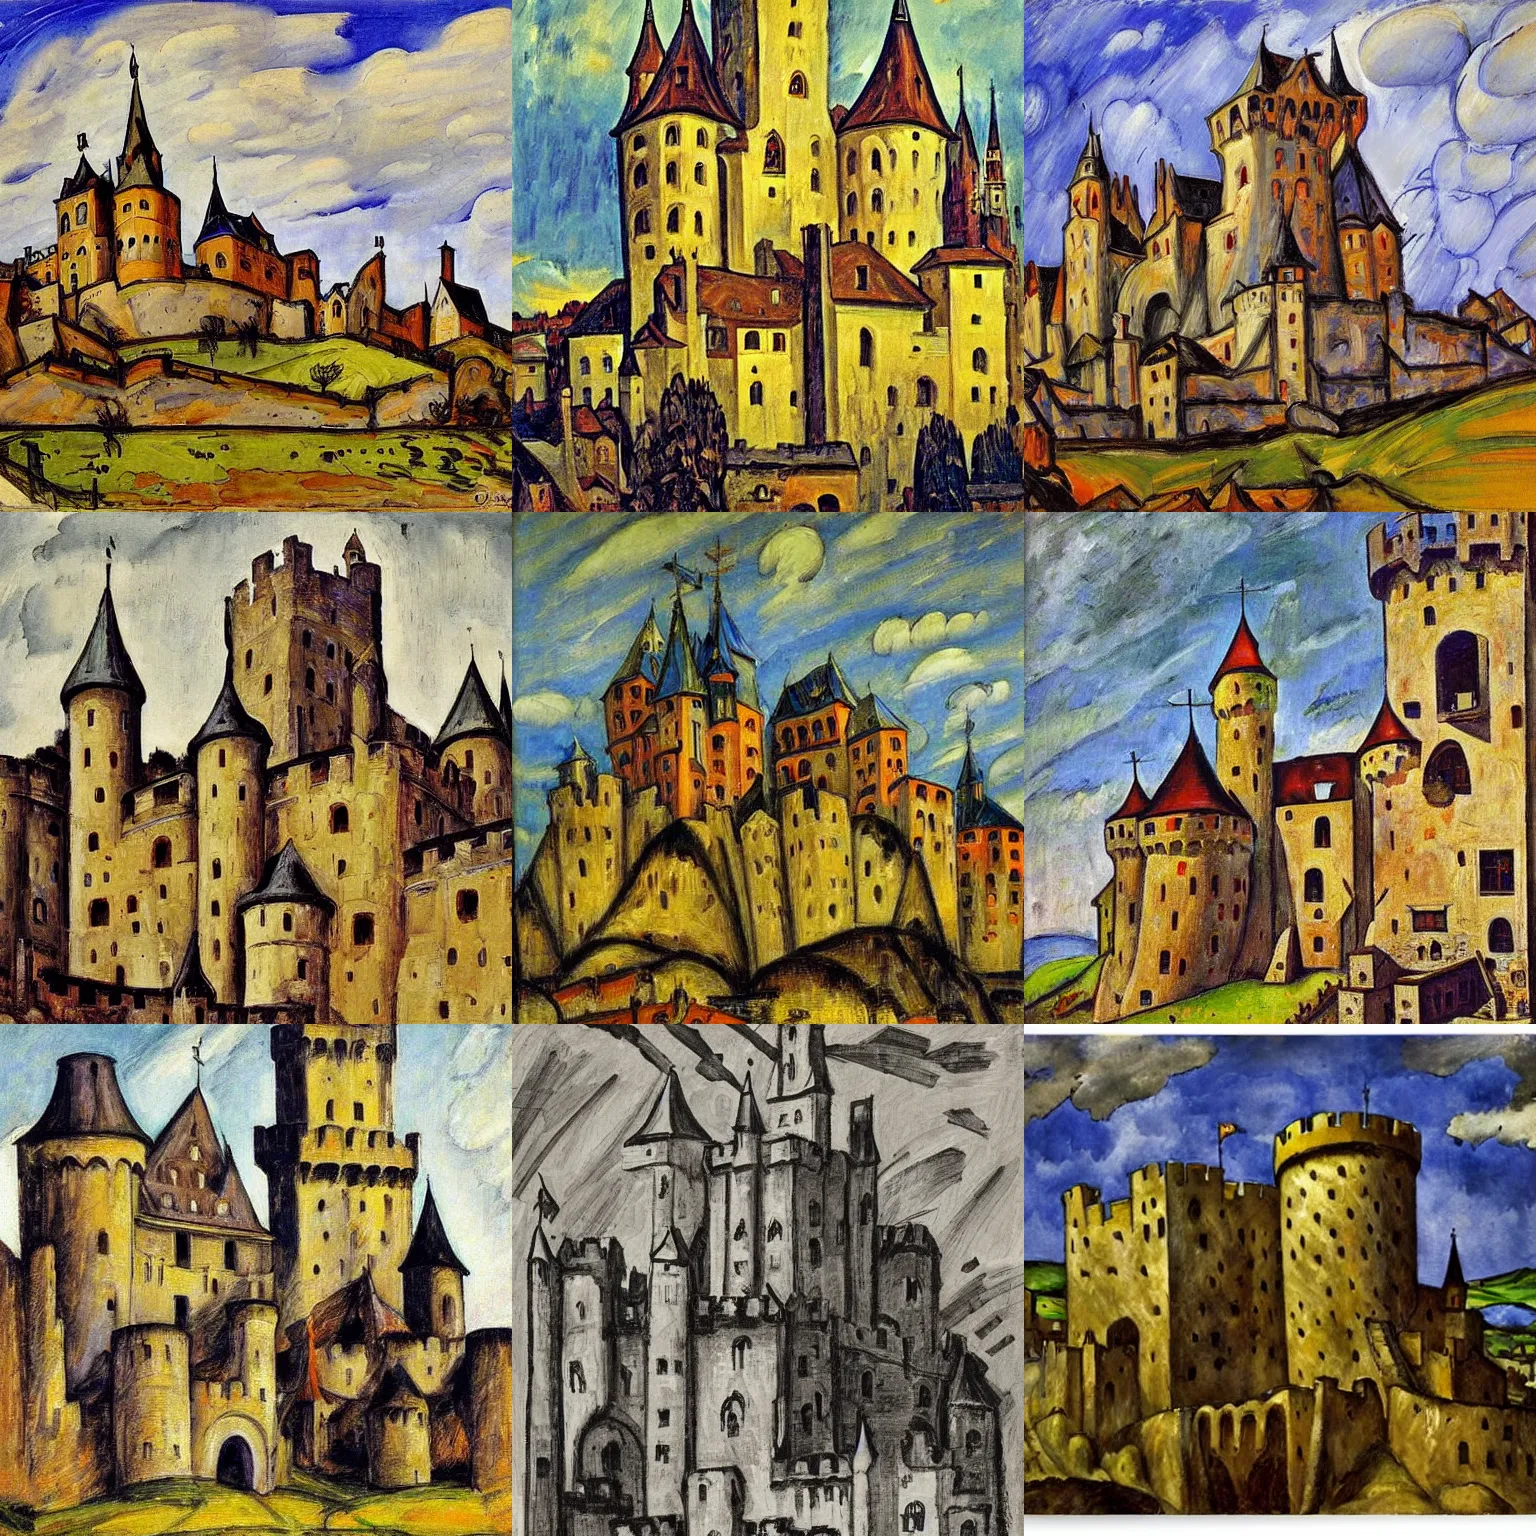 Prompt: medieval castle, by othon friesz